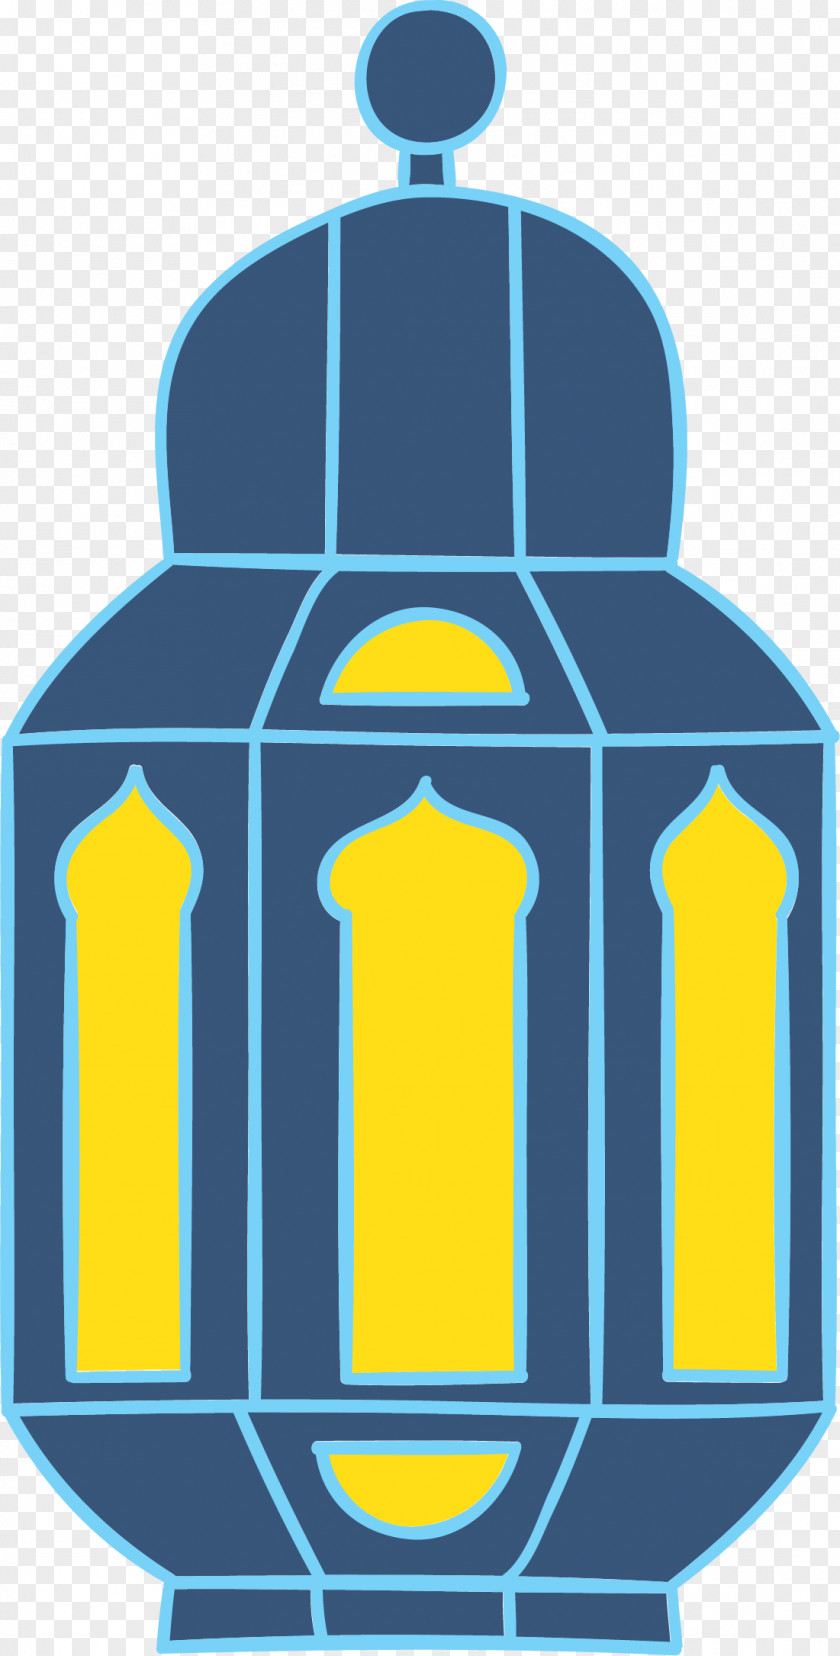 Blue Oil Lamp Of Eid Al Fitr Al-Fitr Al-Adha Illustration PNG